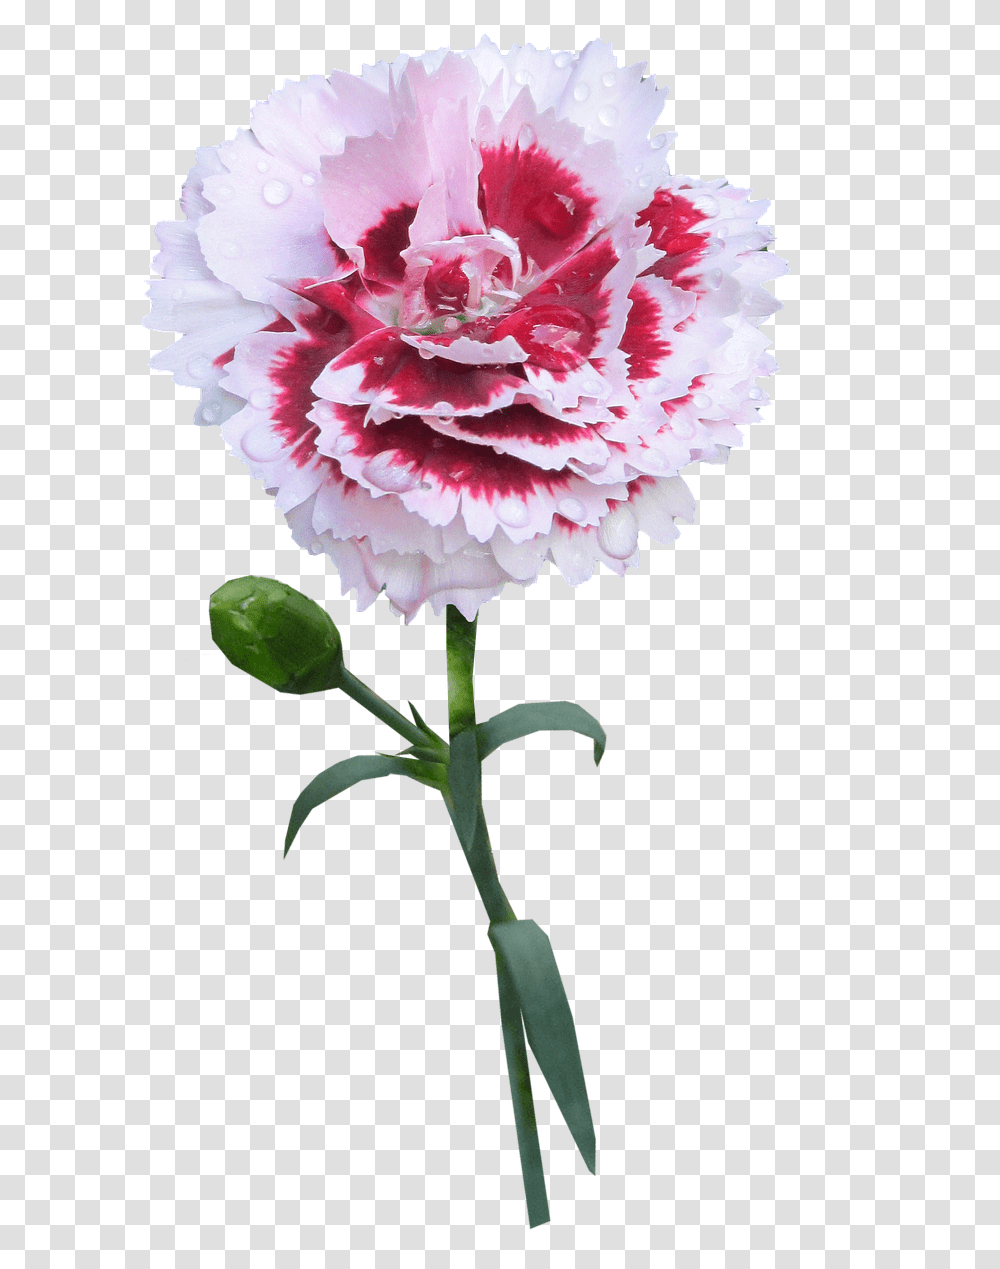 Carnation Stem Flower Free Picture Carnation With Stem Background, Plant, Blossom Transparent Png